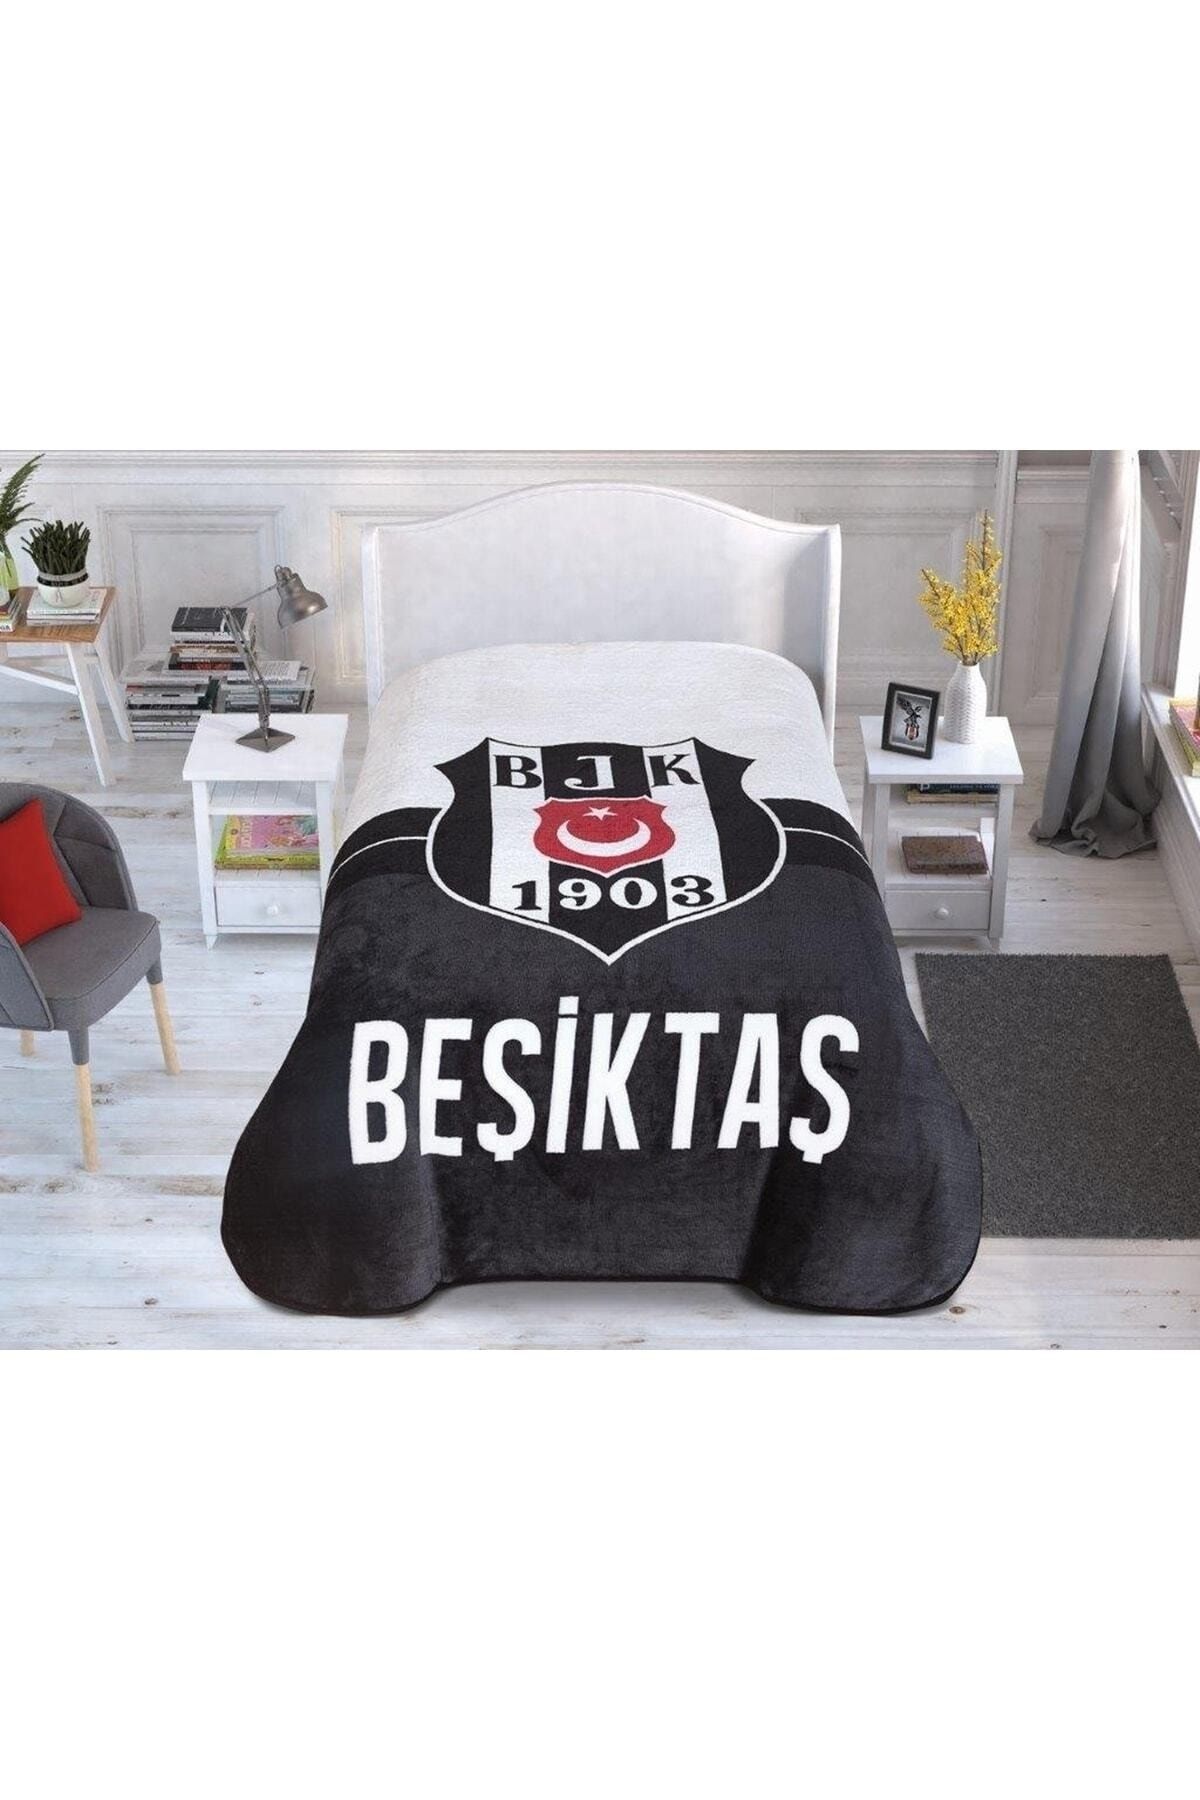 Taç لوگوی Beşiktaş 1903 پتوی تکی دارای مجوز